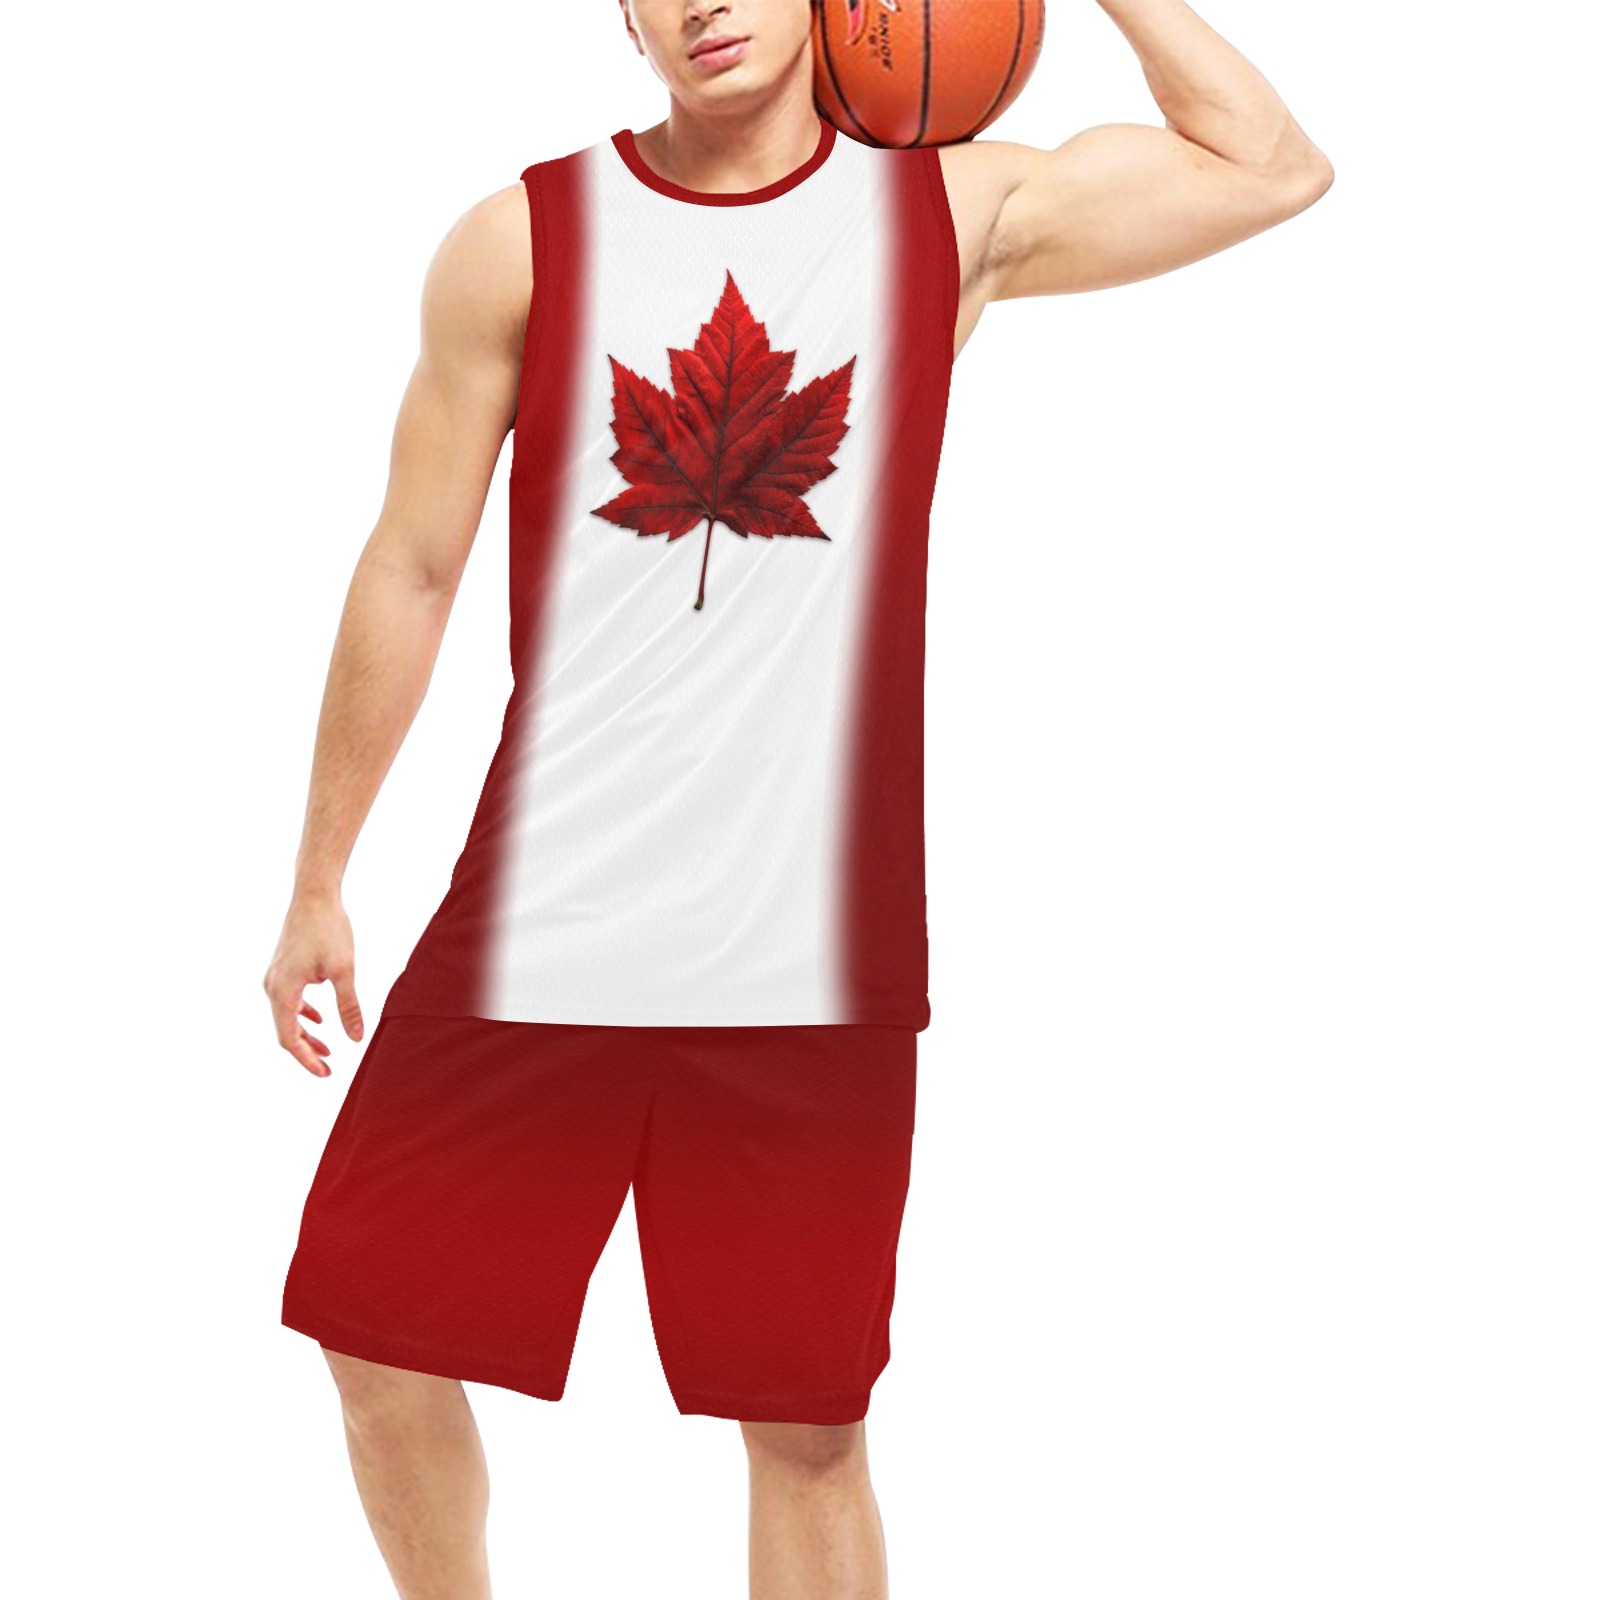 Canada Flag Basketball Team Uniforms Basketball Uniform with Pocket